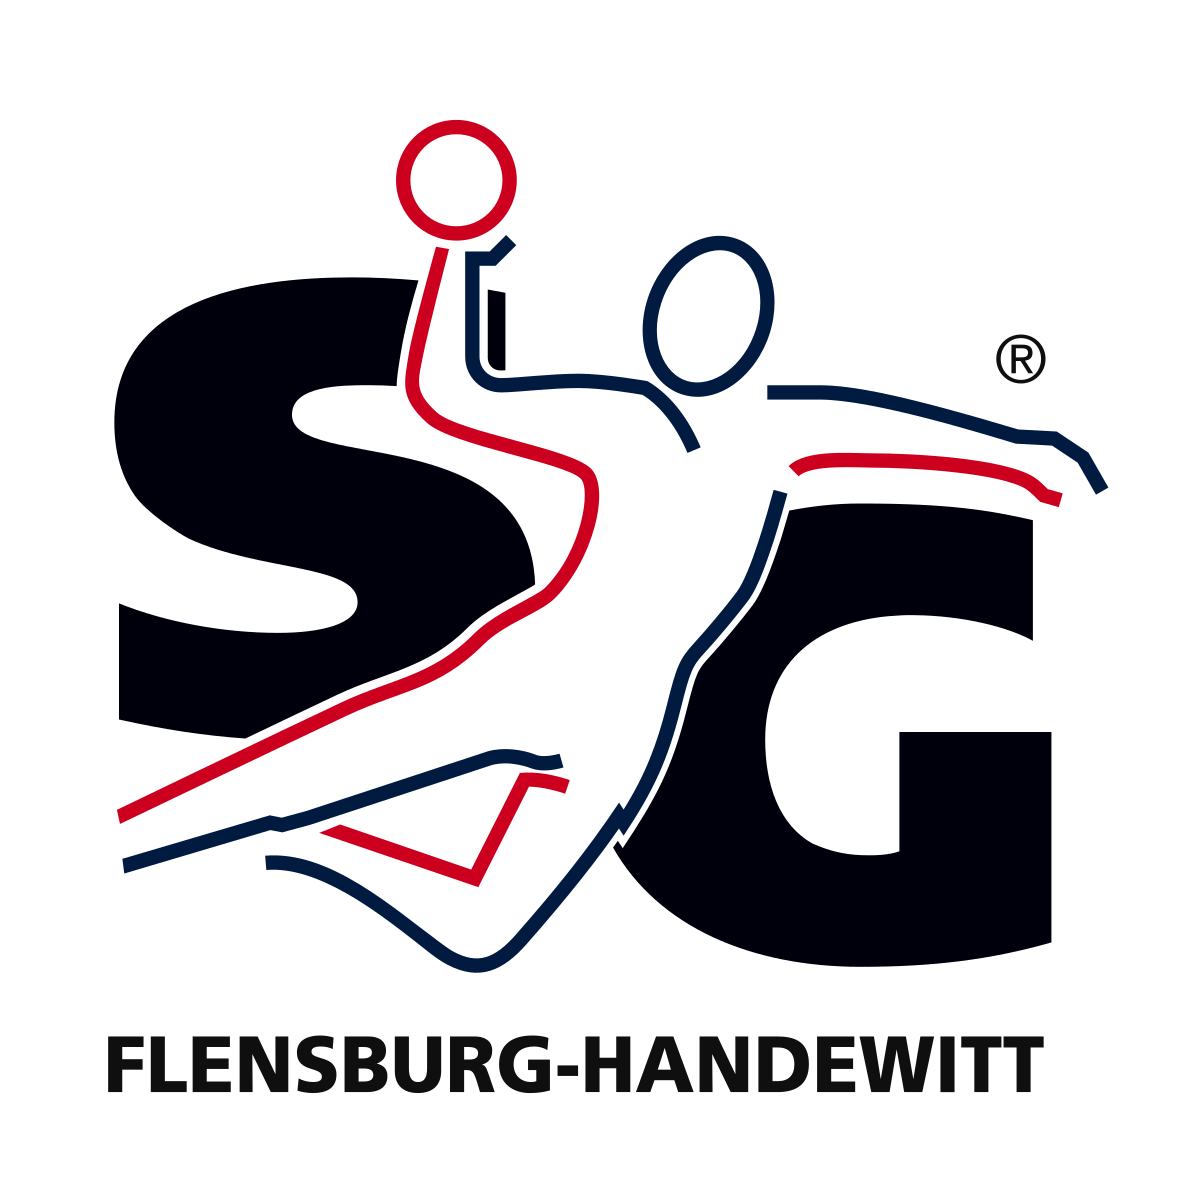 Www Sg Flensburg Handewitt